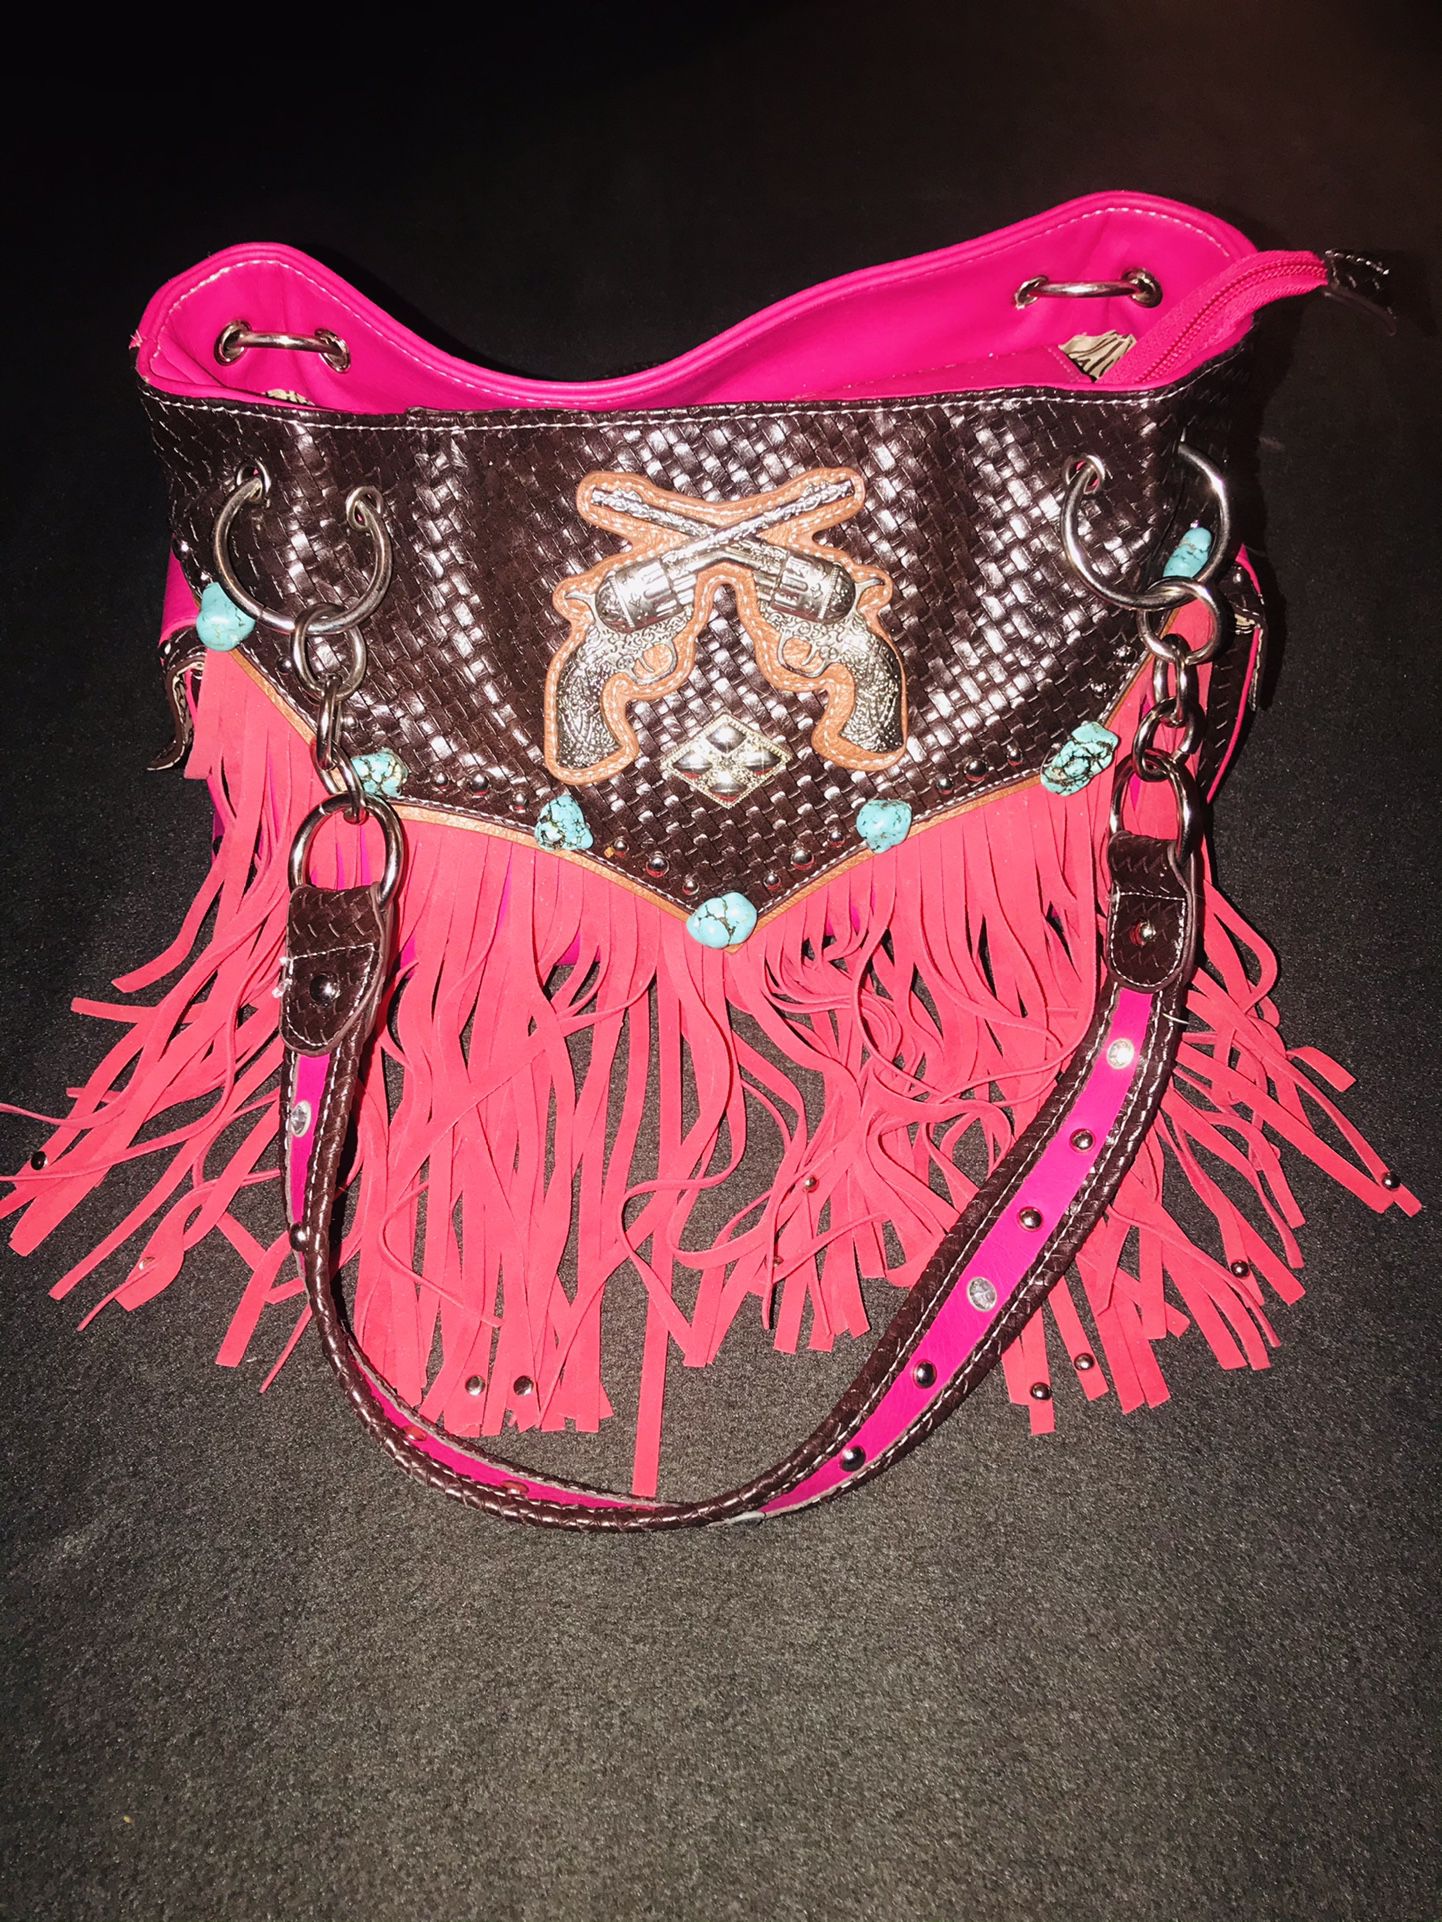 Women’s LARGE Pink Country Western Style Shoulder Bag Handbag / Purse W/ Fringe & Turquoise Details